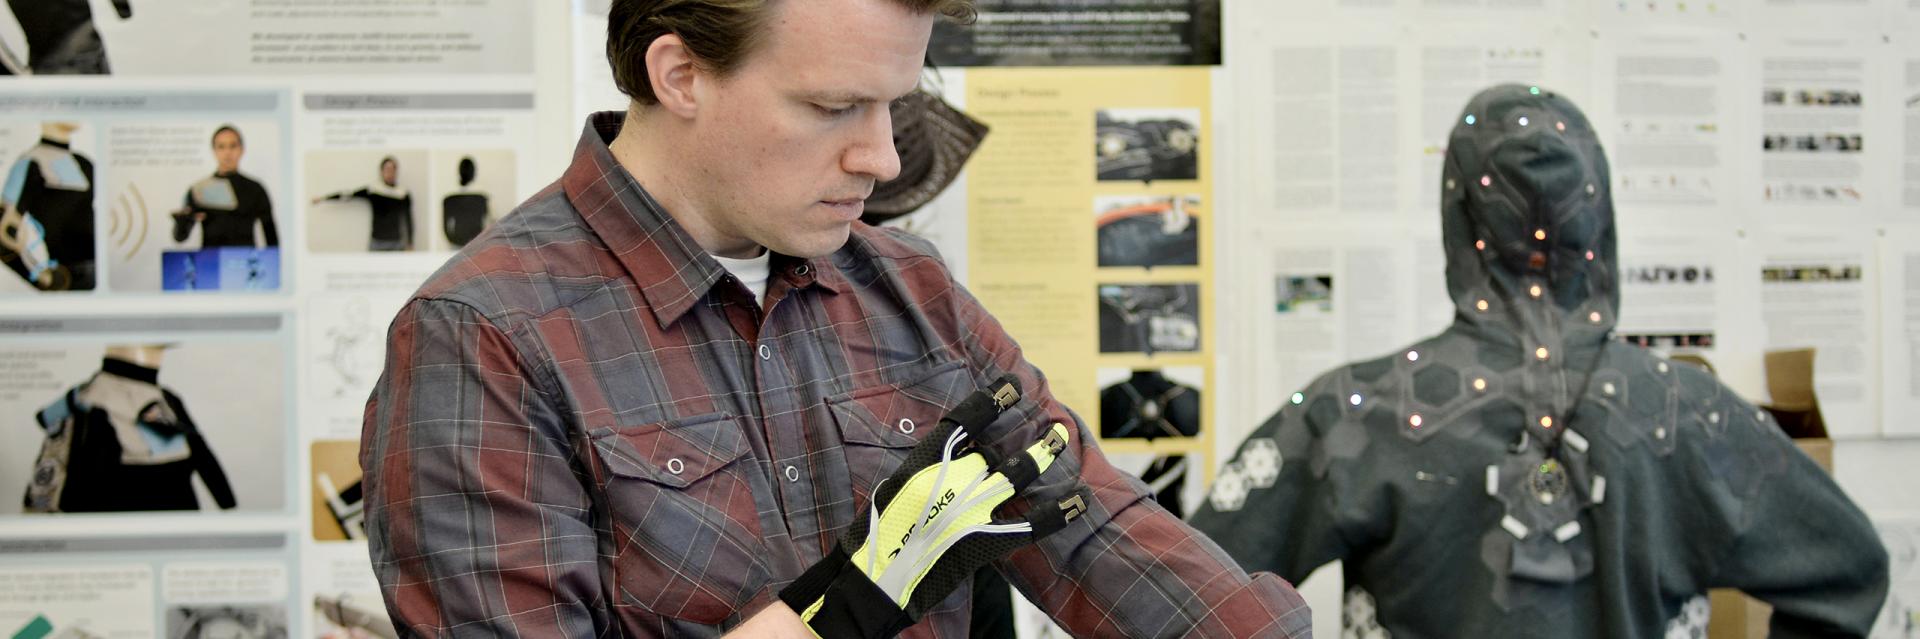 James Hallam wearing a rehabilitation glove